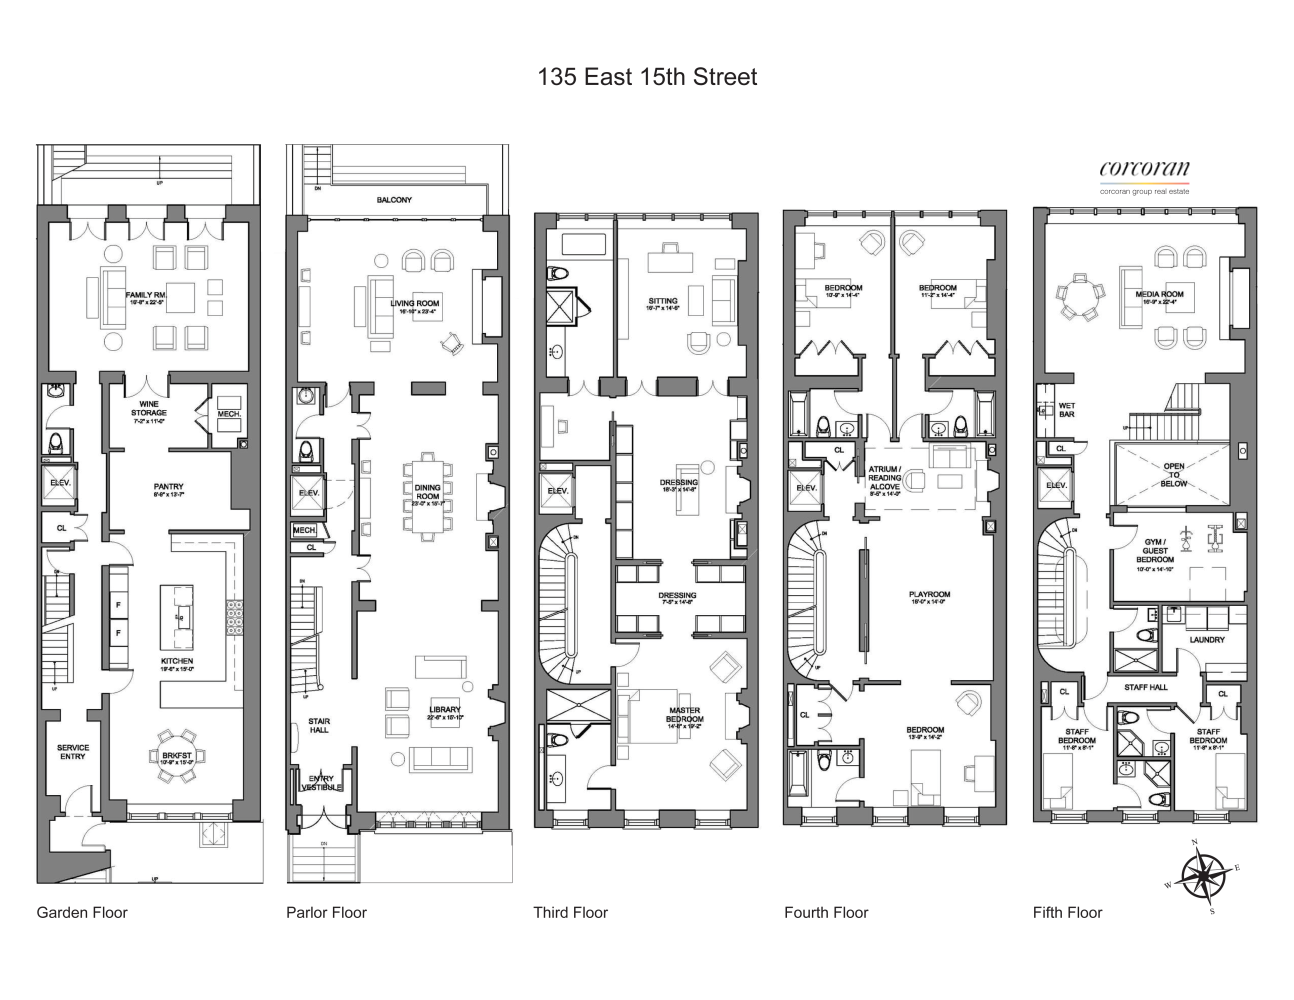 Floorplan for 135 East 15th Street